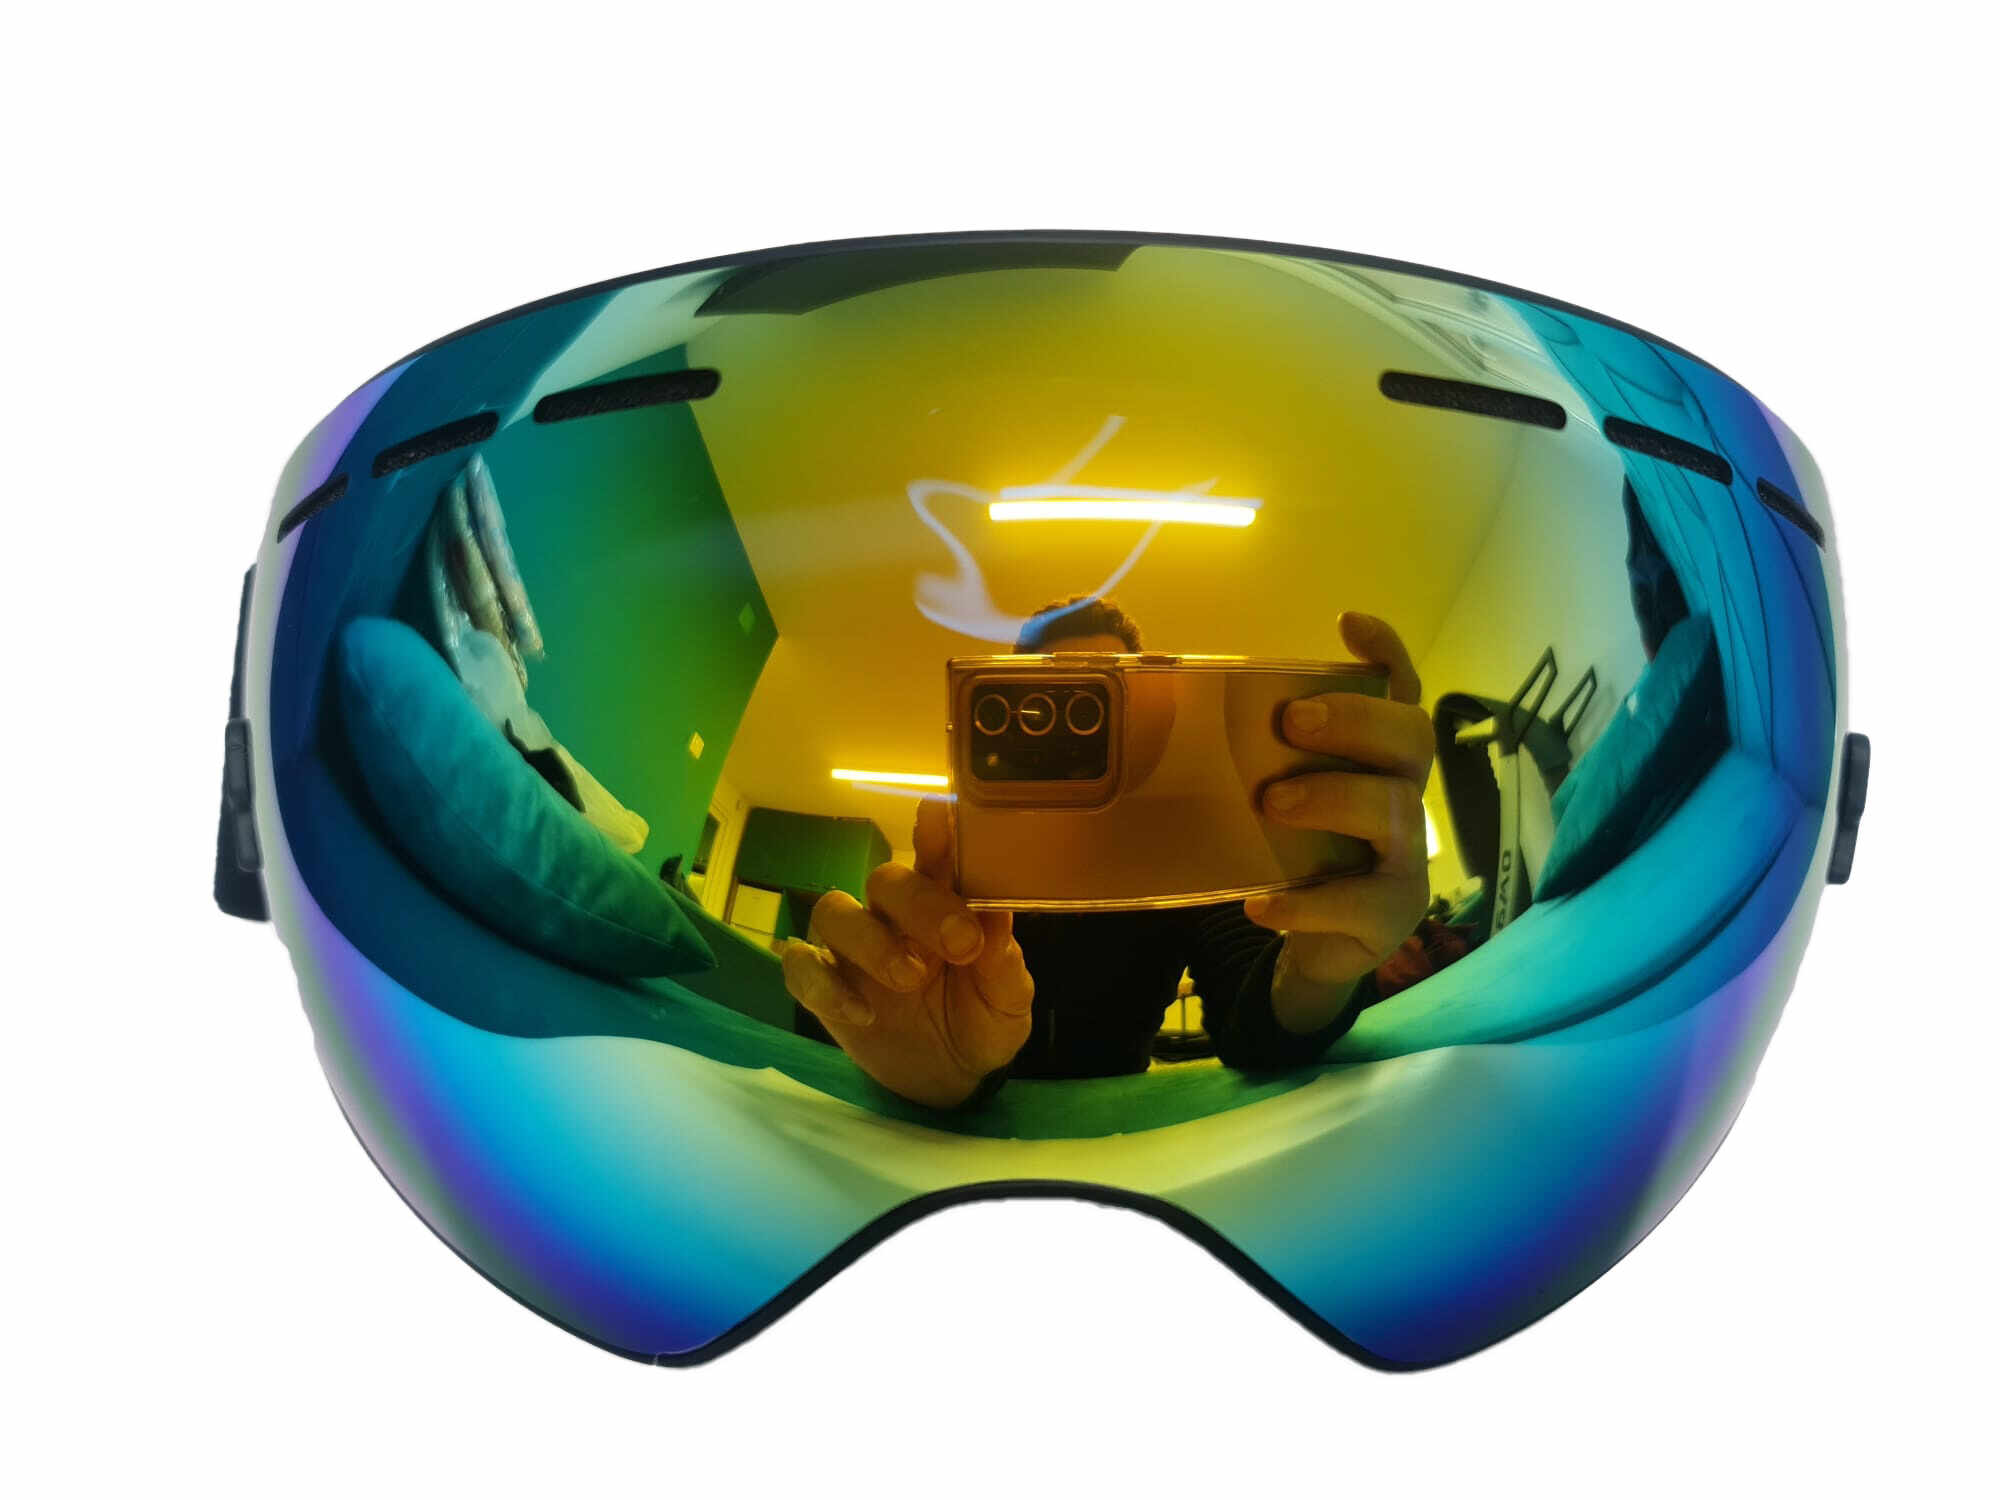 Ochelari ski si snowboard, lentila sferica dubla, demontabila, polarizata, ventilate anti-ceata, oglinda, multicolori